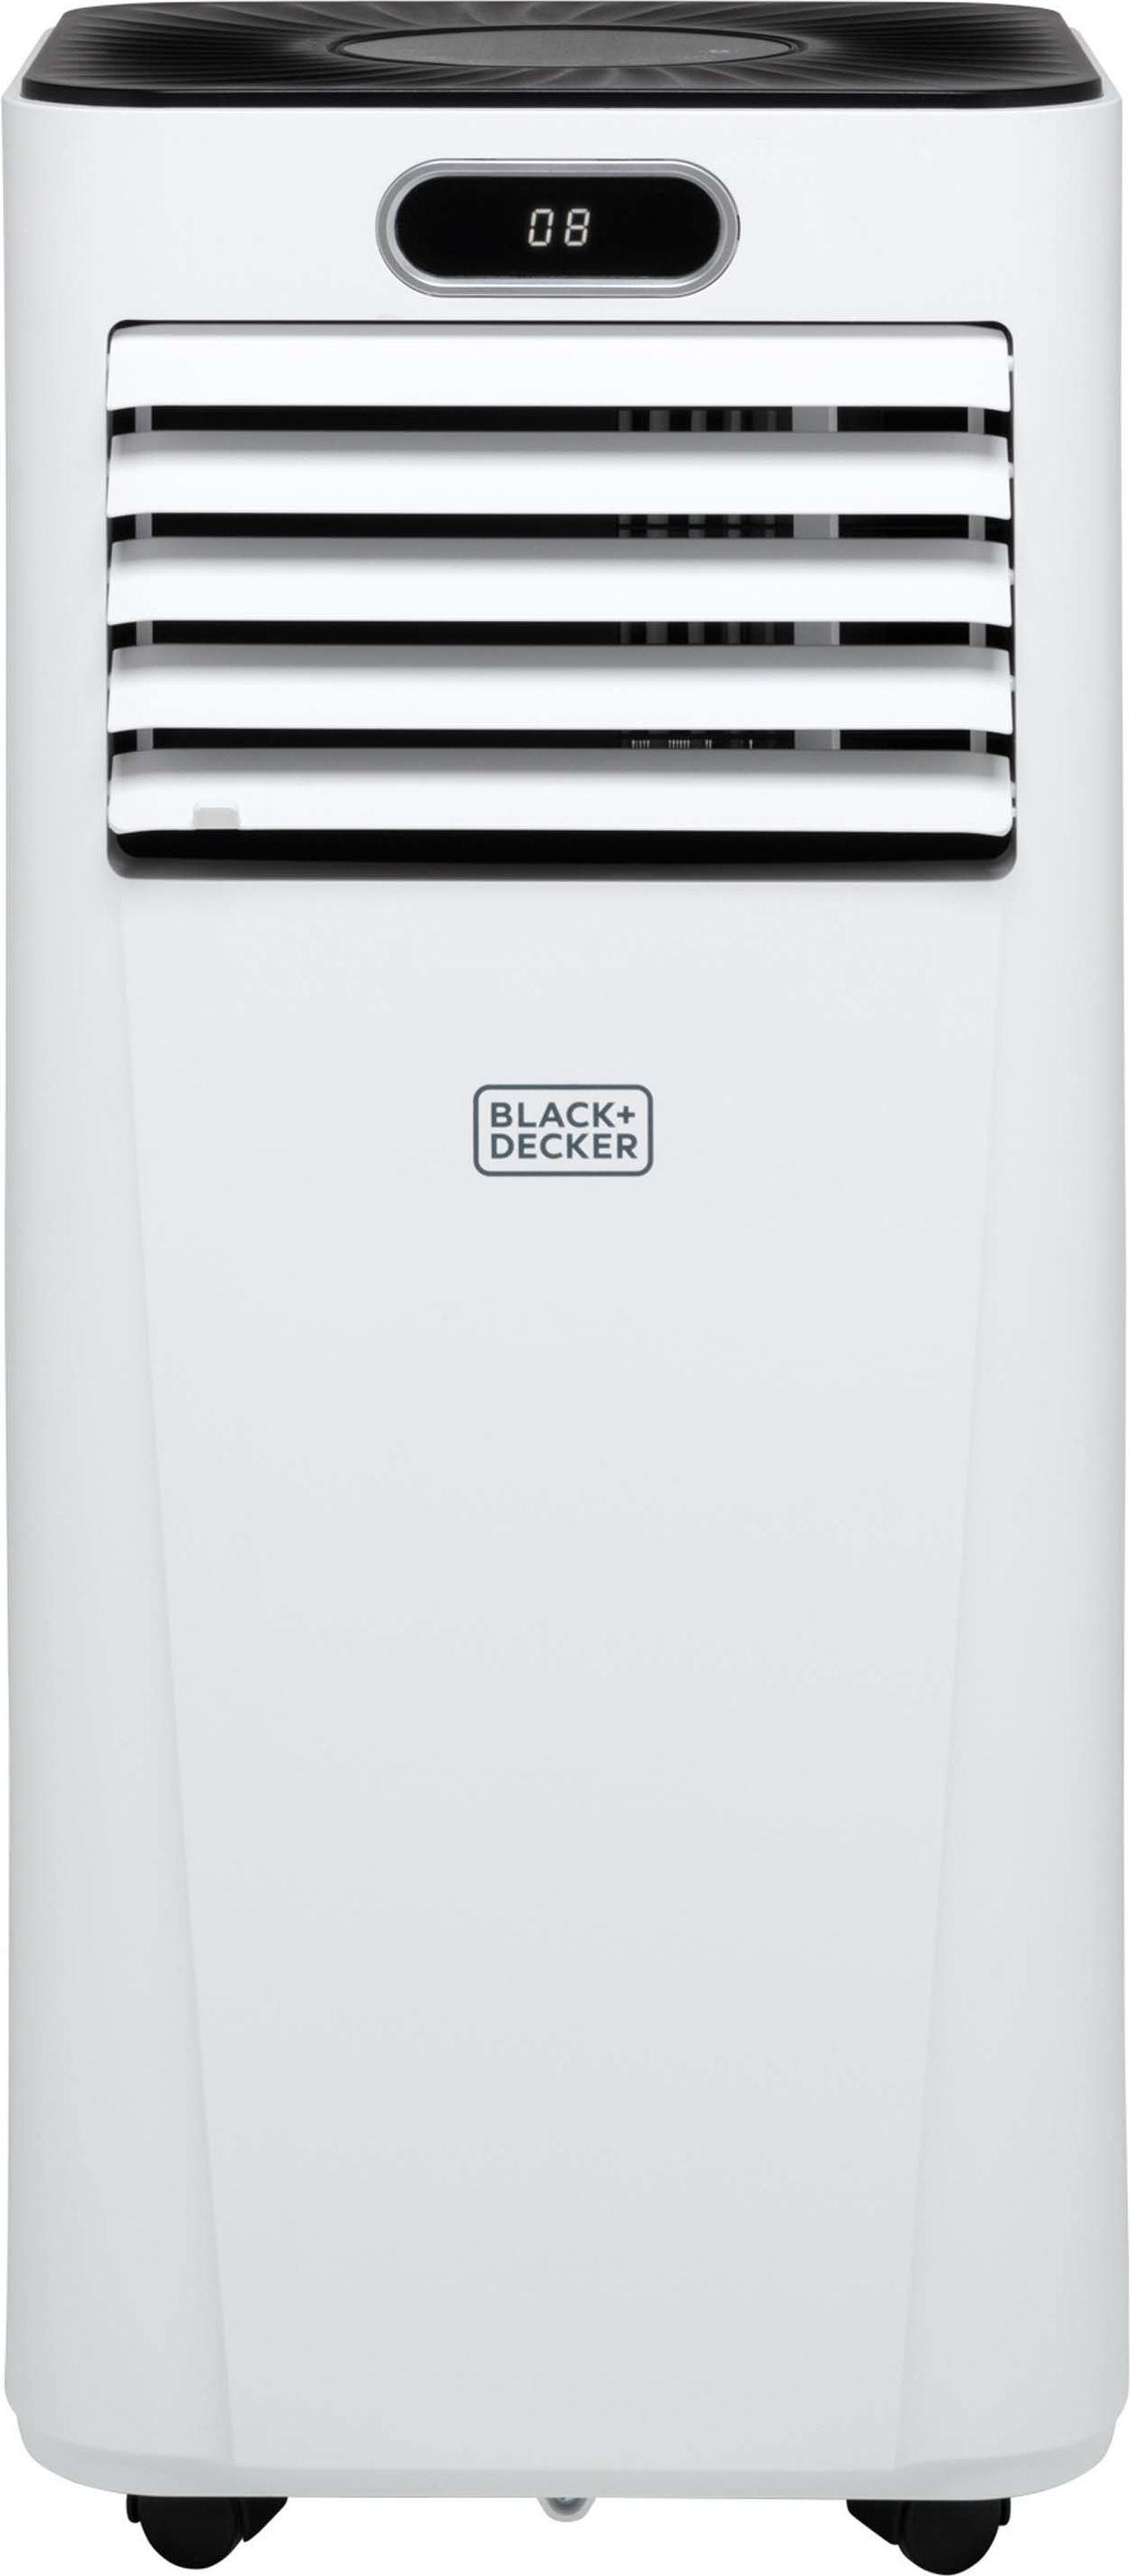 Black + Decker BLACK+DECKER Portable Washer in White with Child Safety Lock  & Reviews